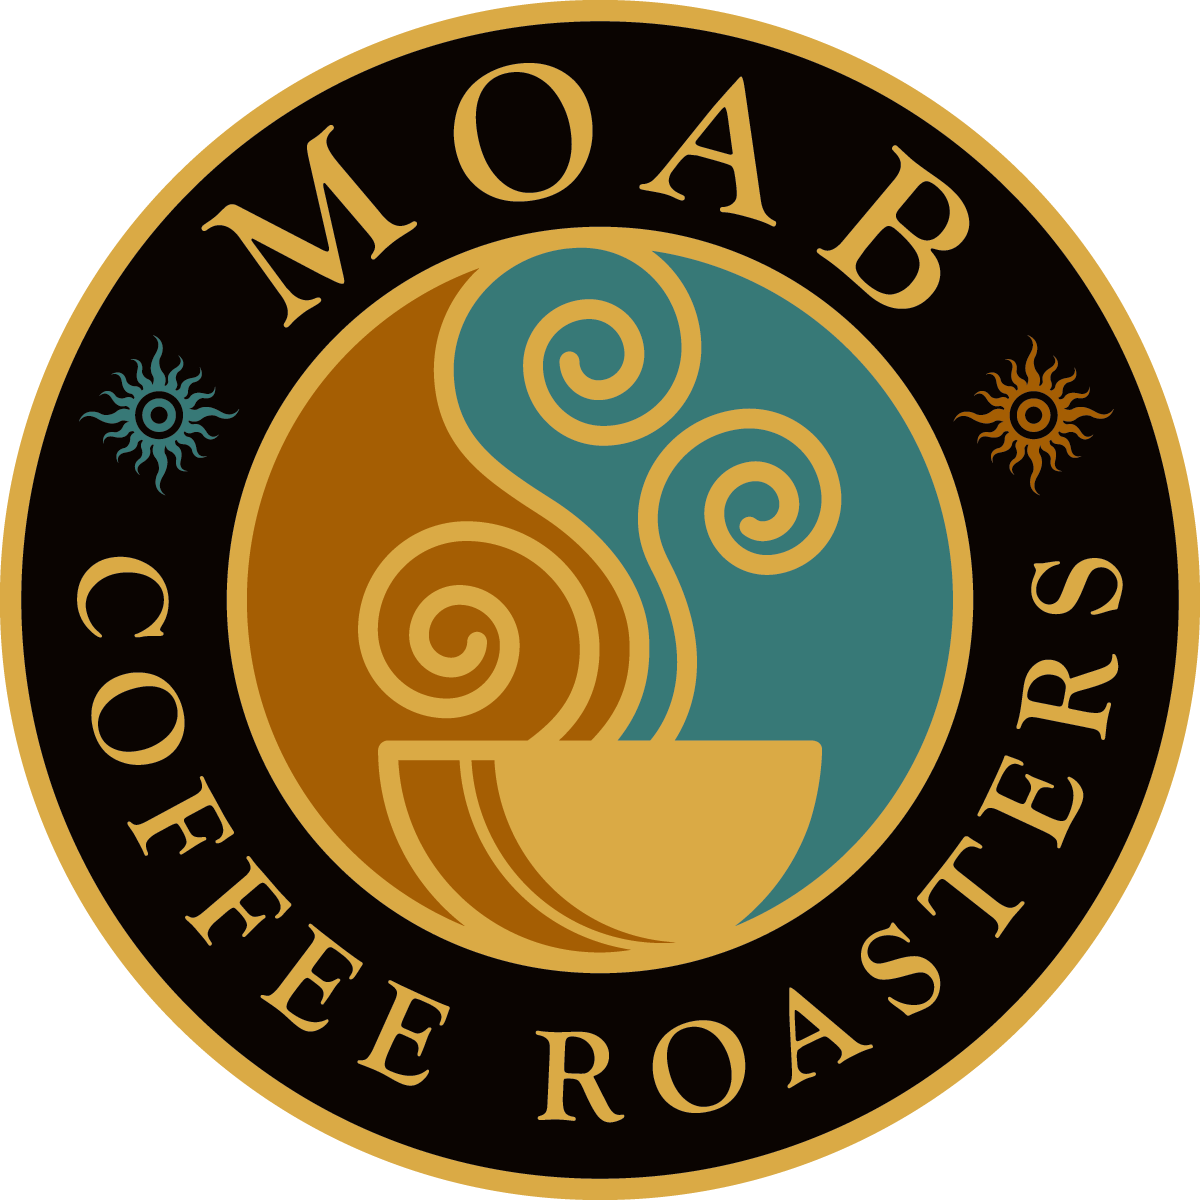 Moab Coffee Roasters